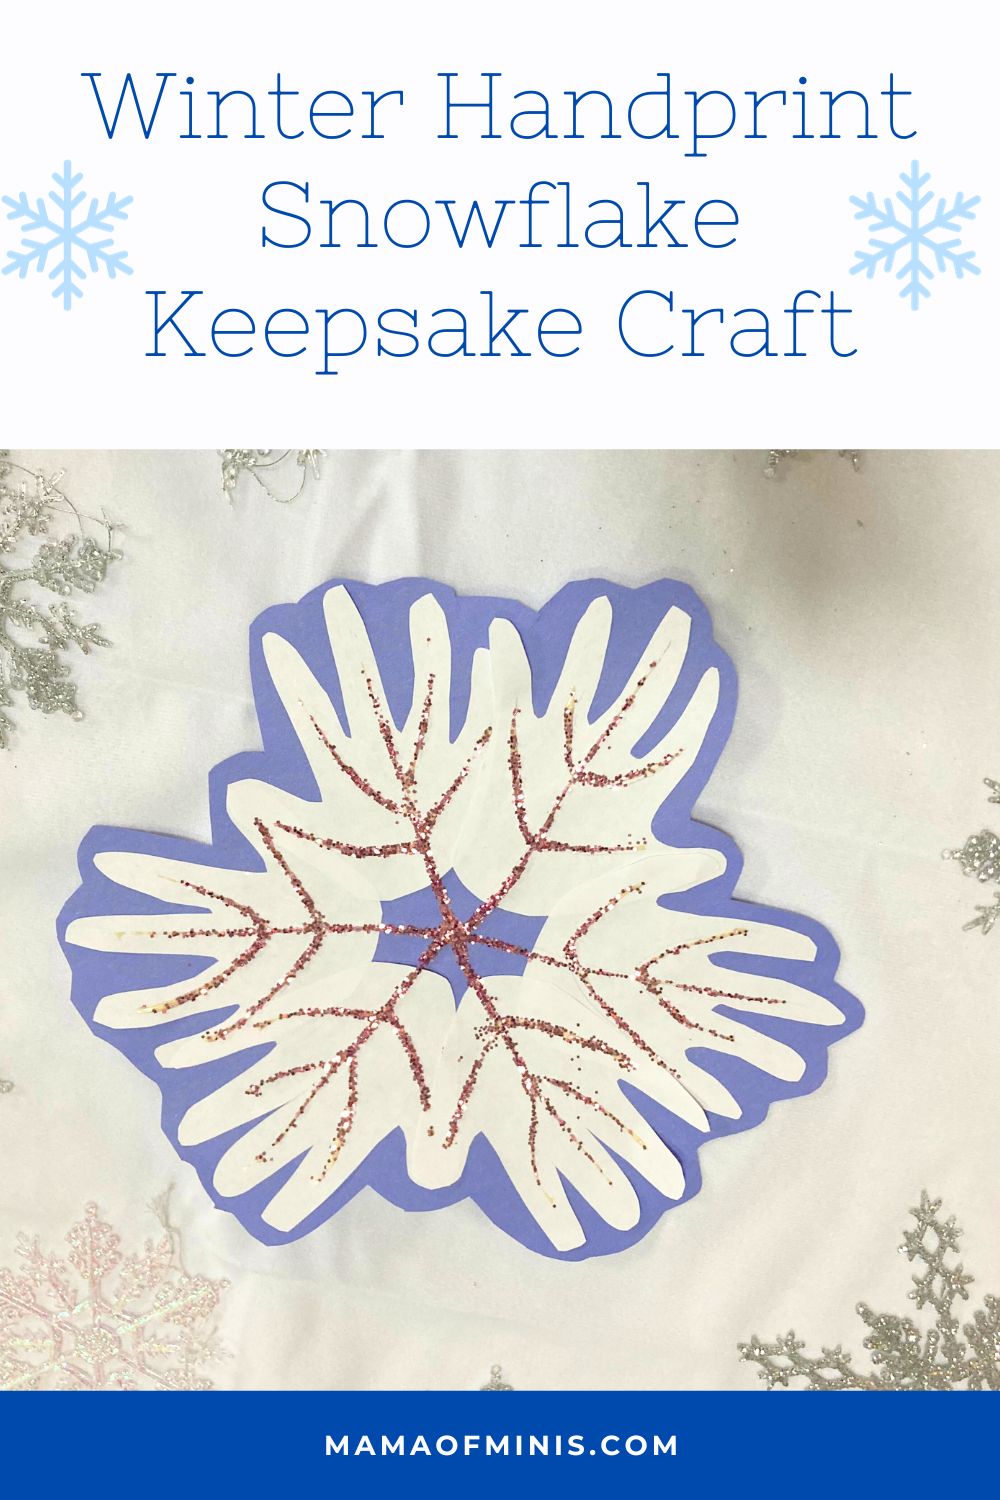 Winter Handprint Snowflake Keepsake Craft